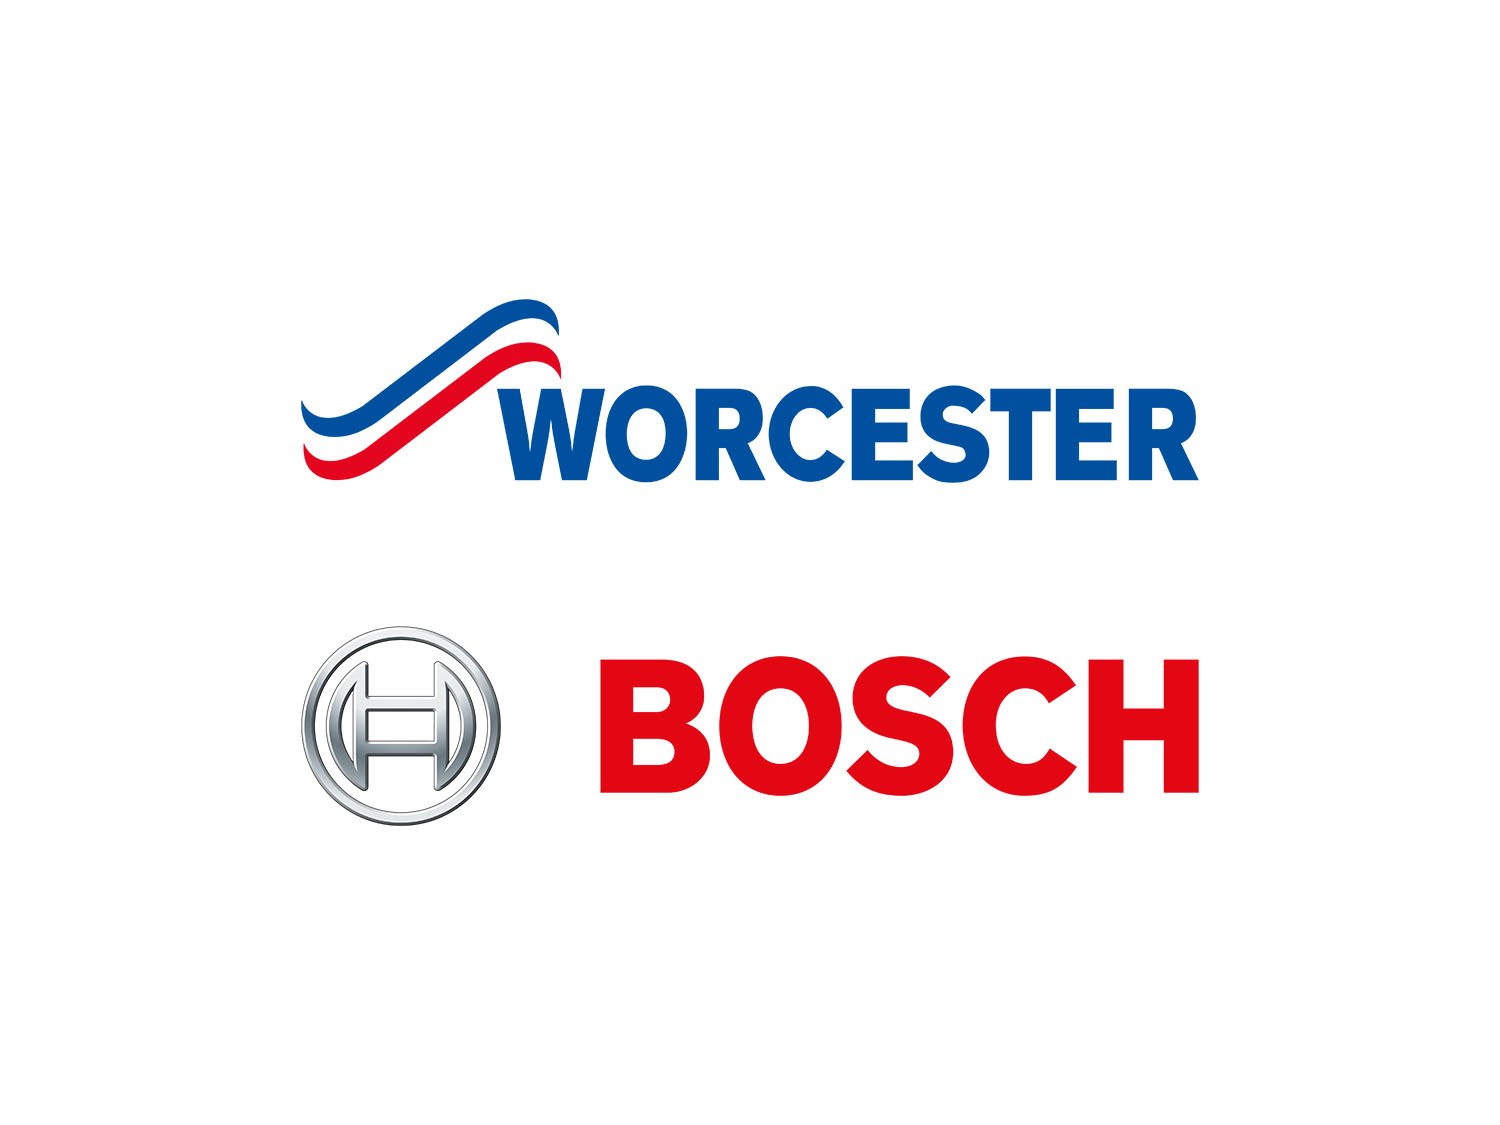 Worcester Bosch Air Source Heat Pumps